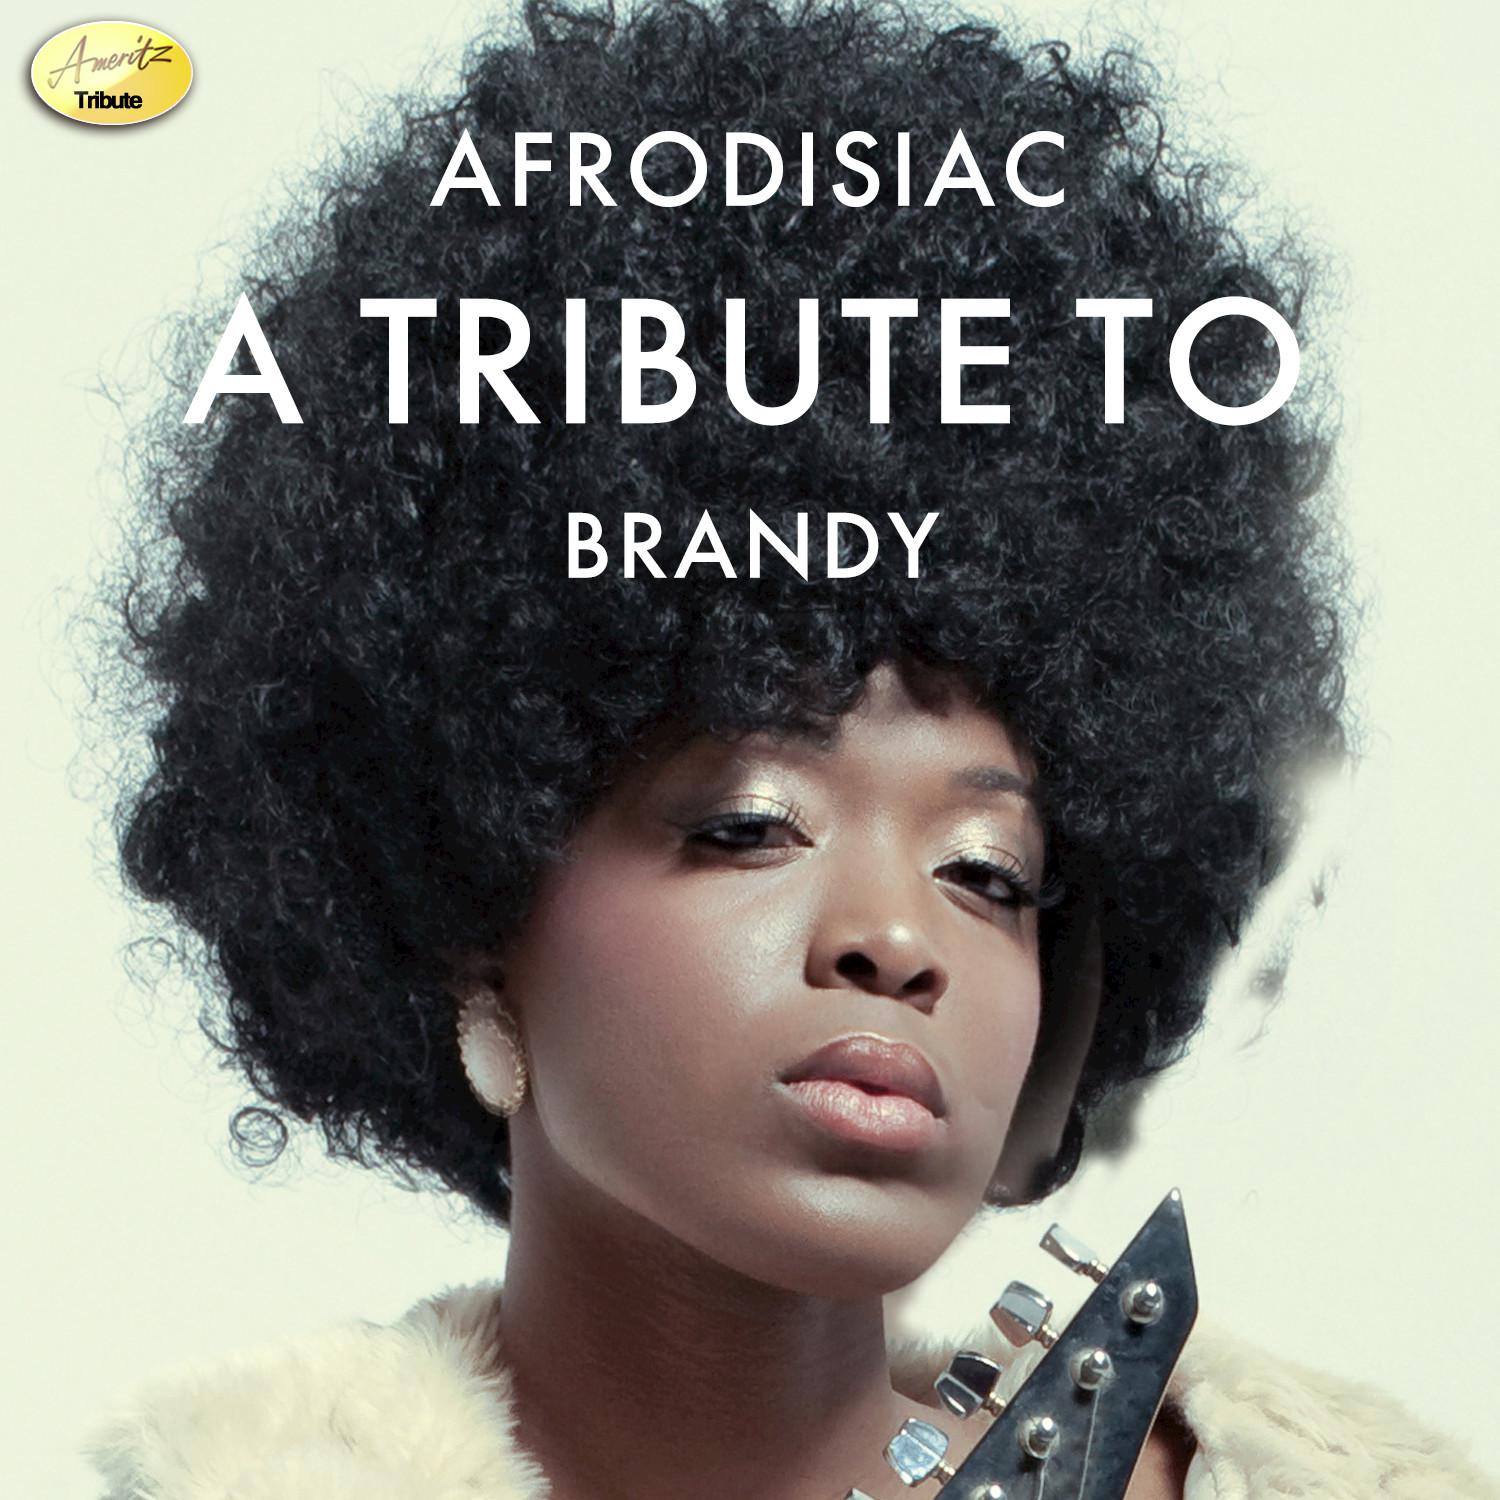 Afrodisiac - A Tribute to Brandy